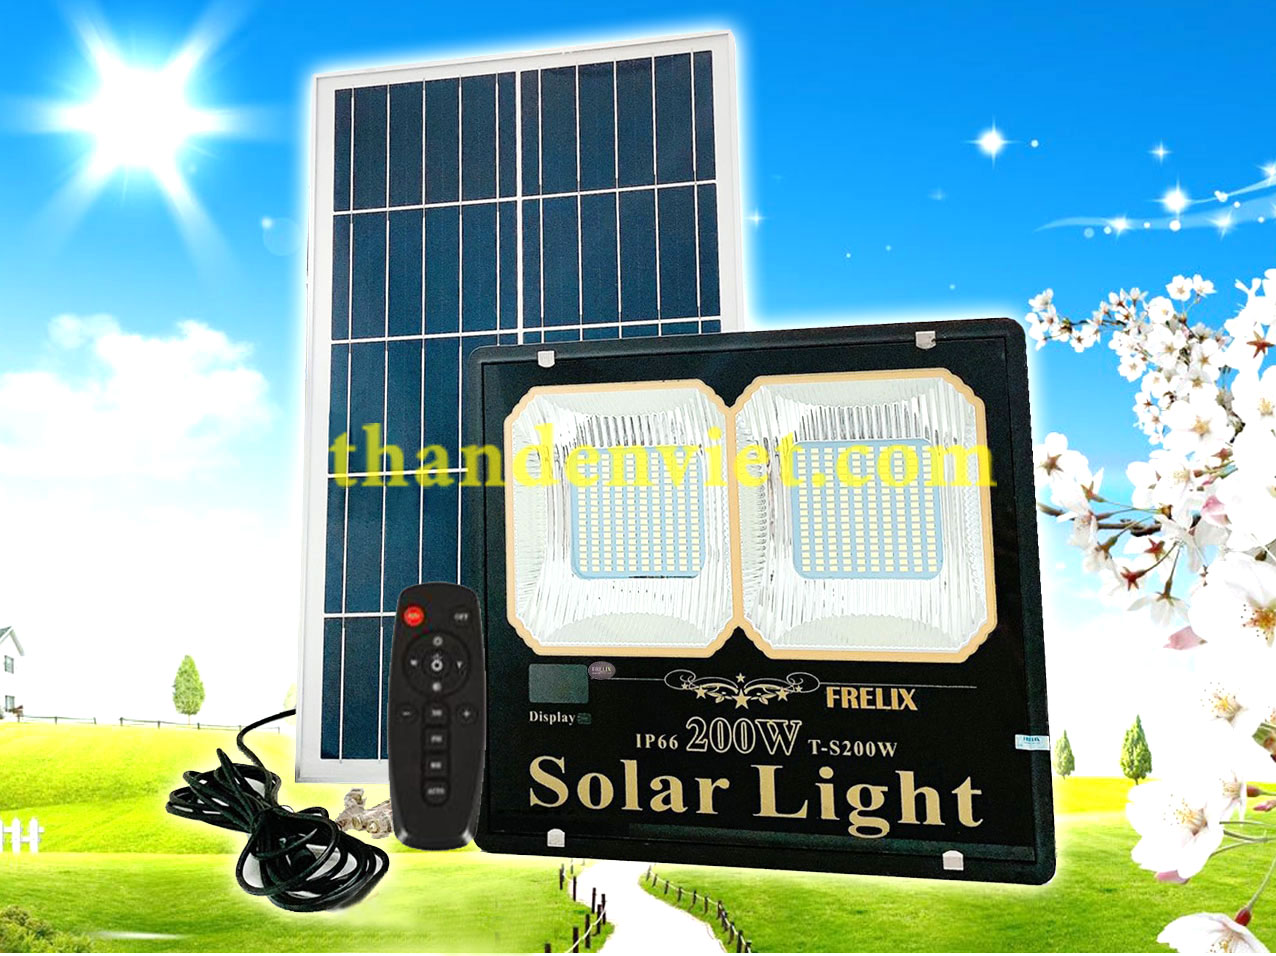 Đèn năng lượng mặt trời FRELIX Solar Light 200W 2 khoang led